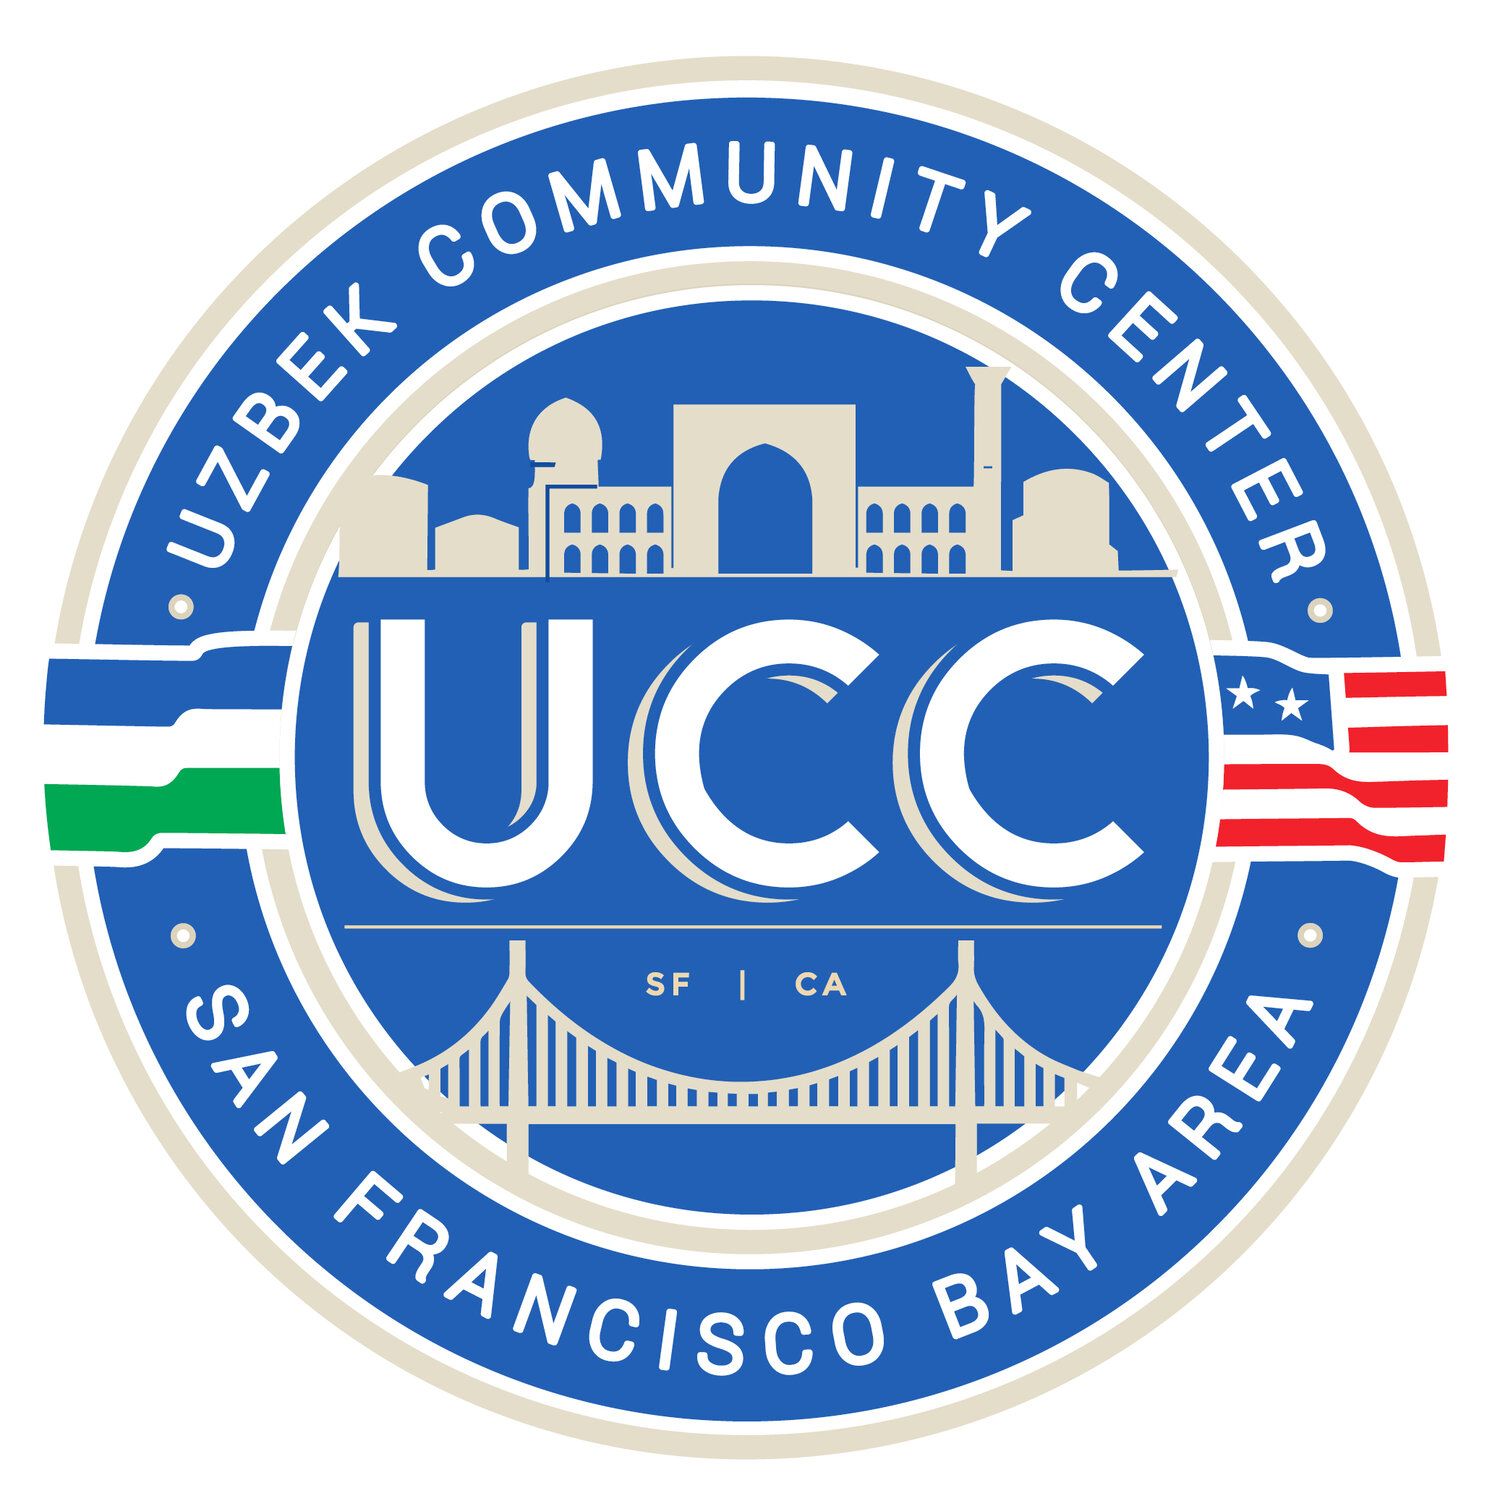 Uzbek Organization in Los Angeles California - Uzbek Community Center of San Francisco Bay Area